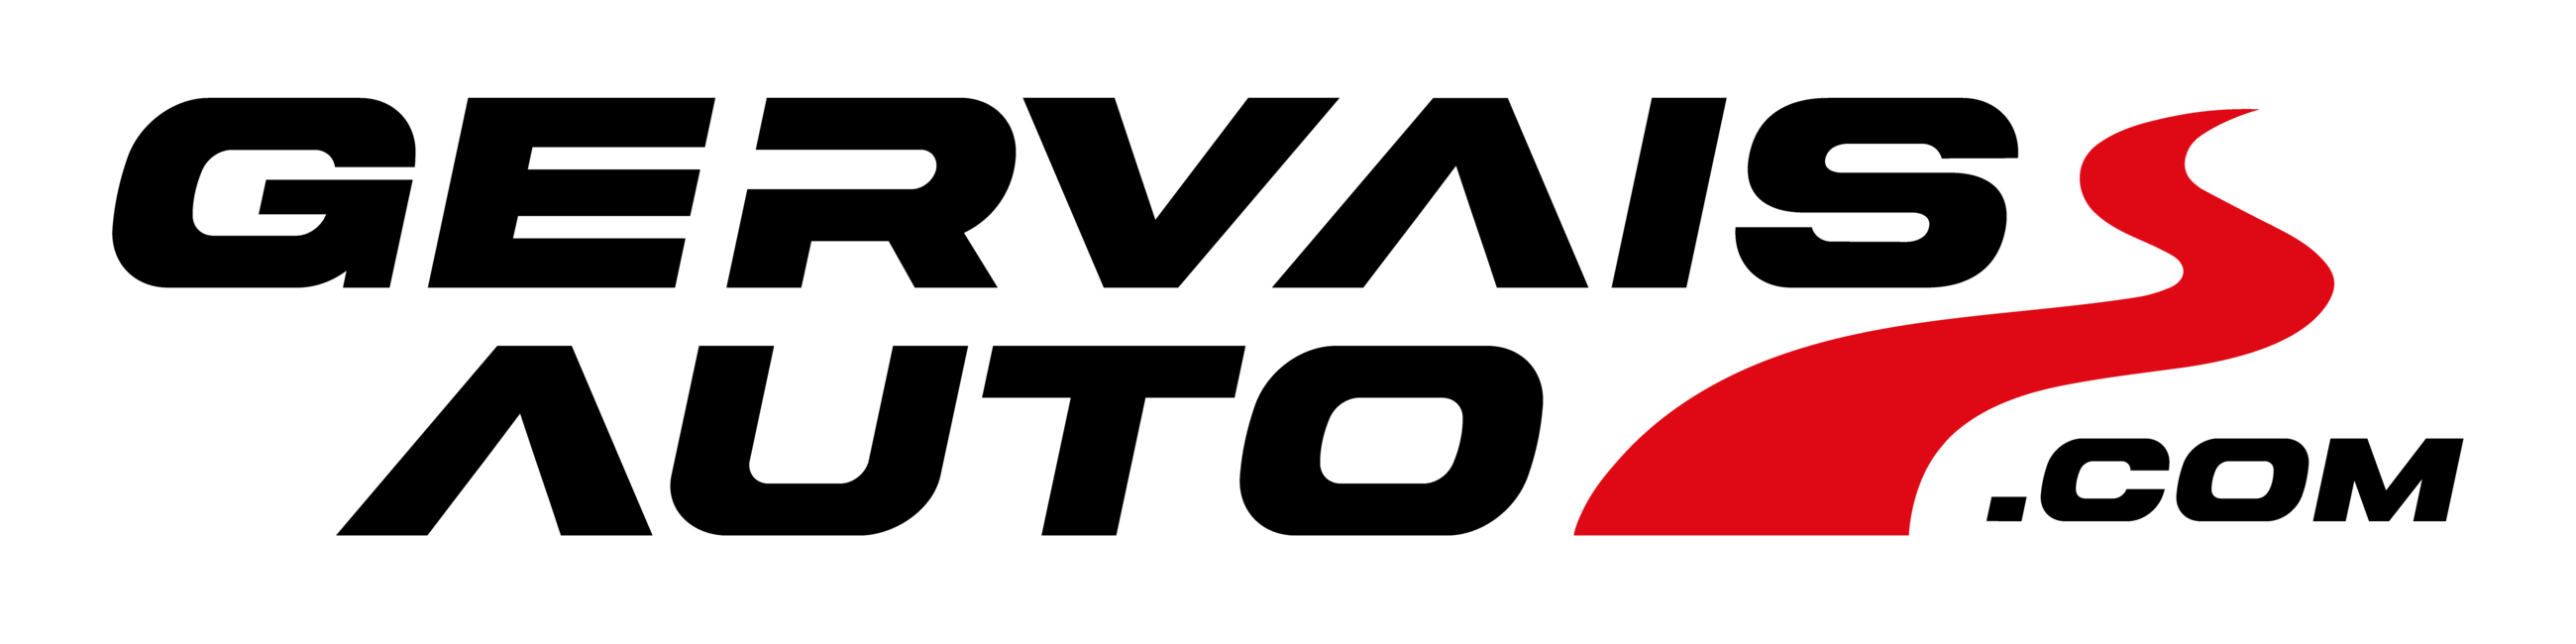 Logo de Gervais Auto Shawinigan